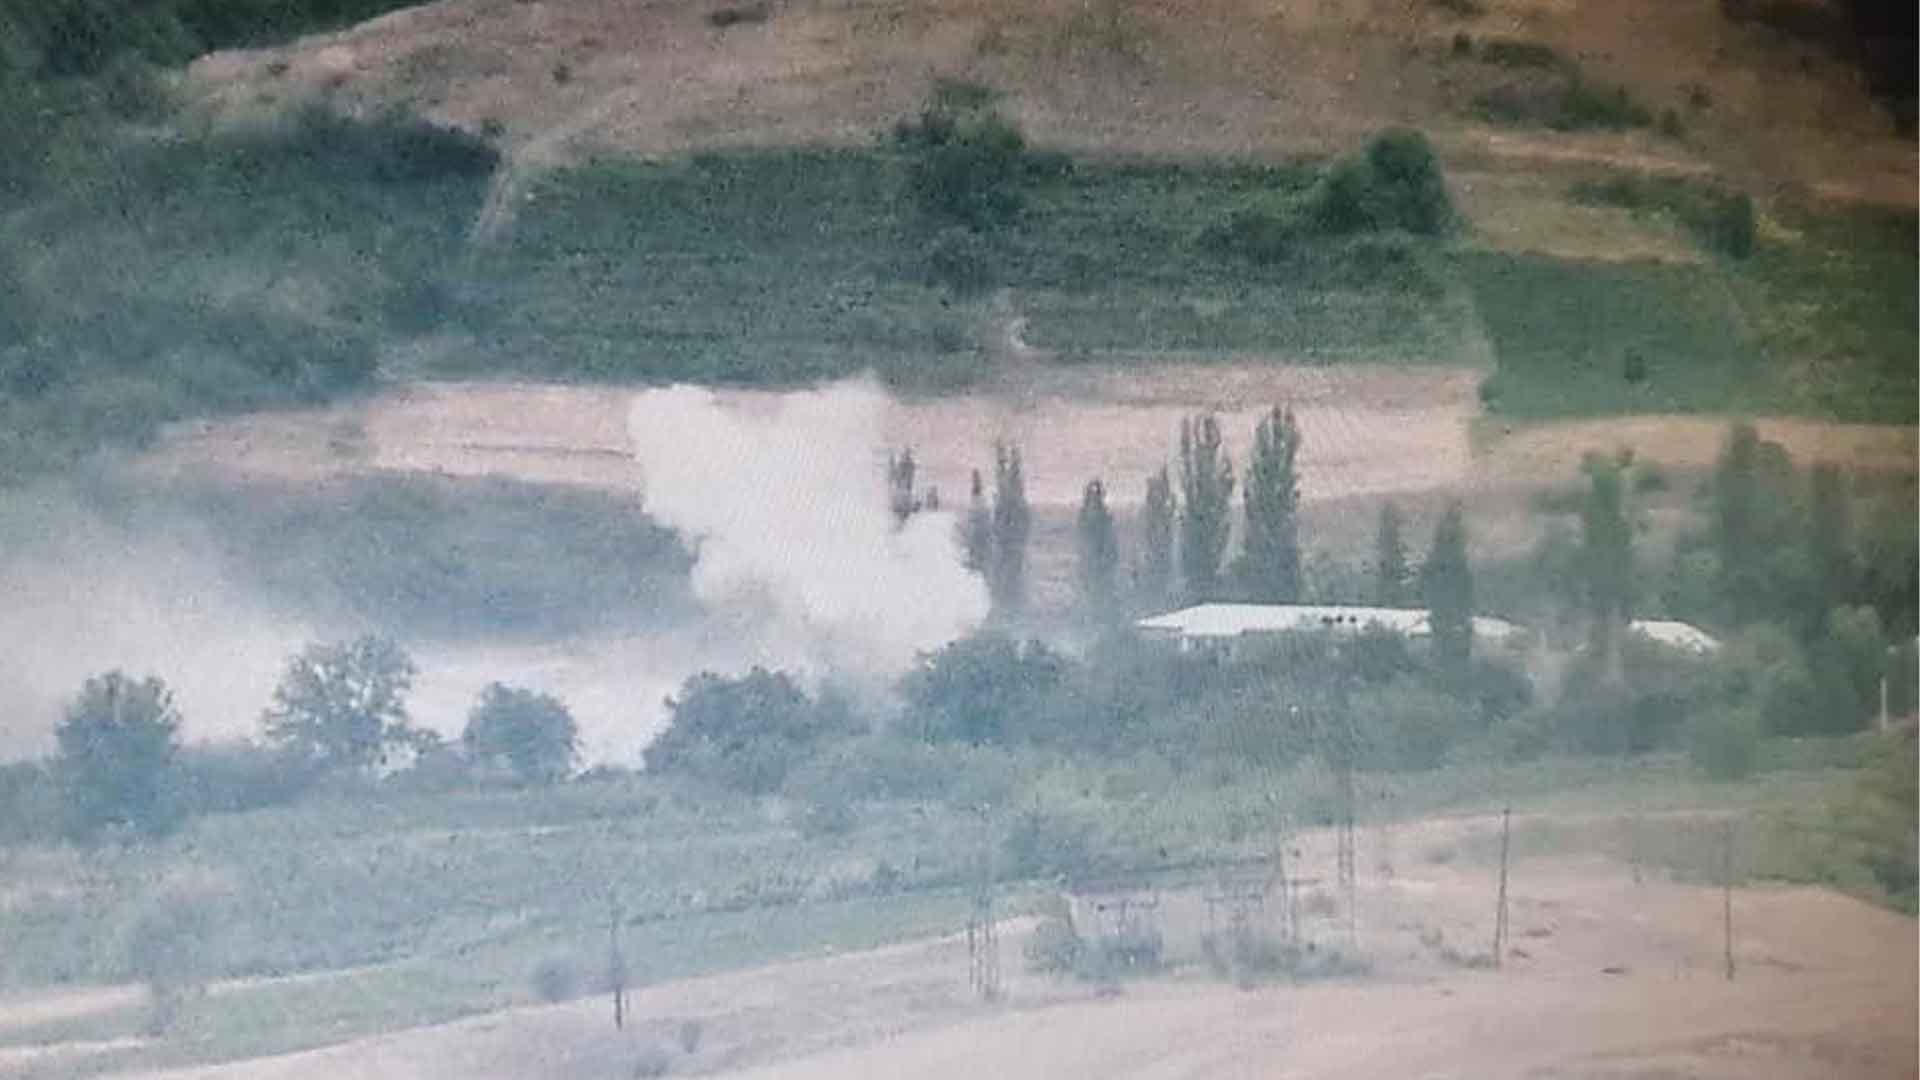 Dailystorm - Азербайджан нанес артиллерийский удар по армянским приграничным селам